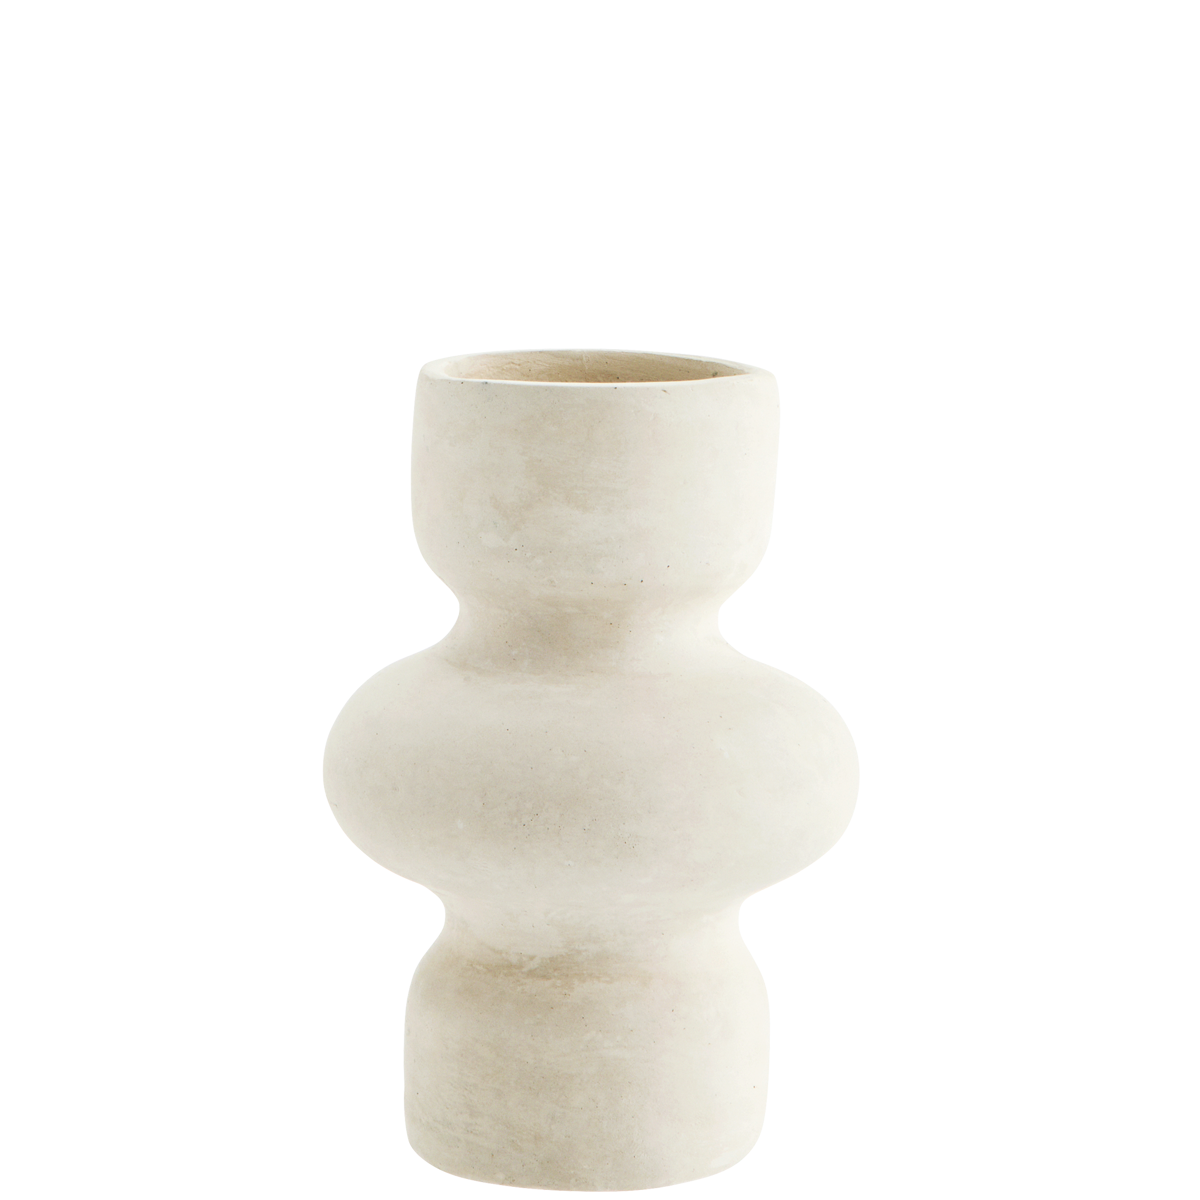 Paper mache vase